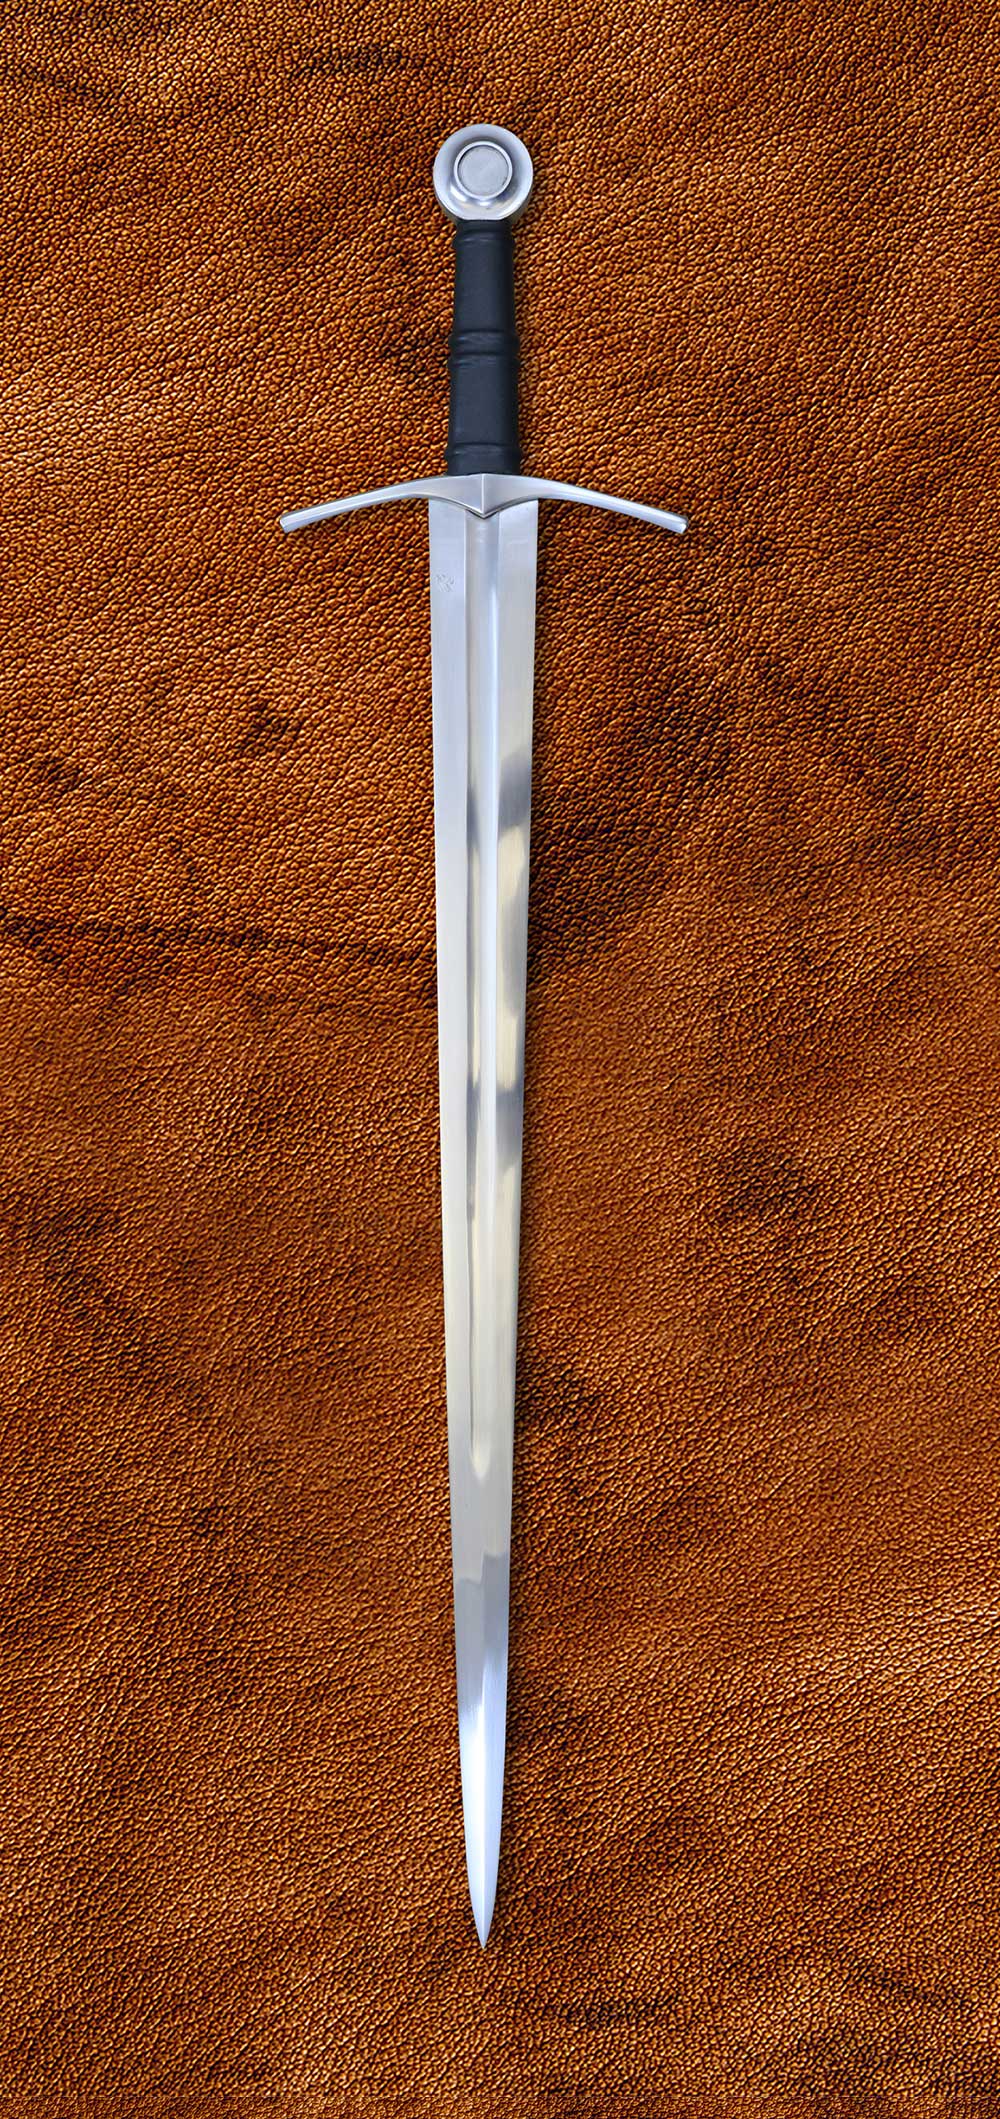 replica medieval sword